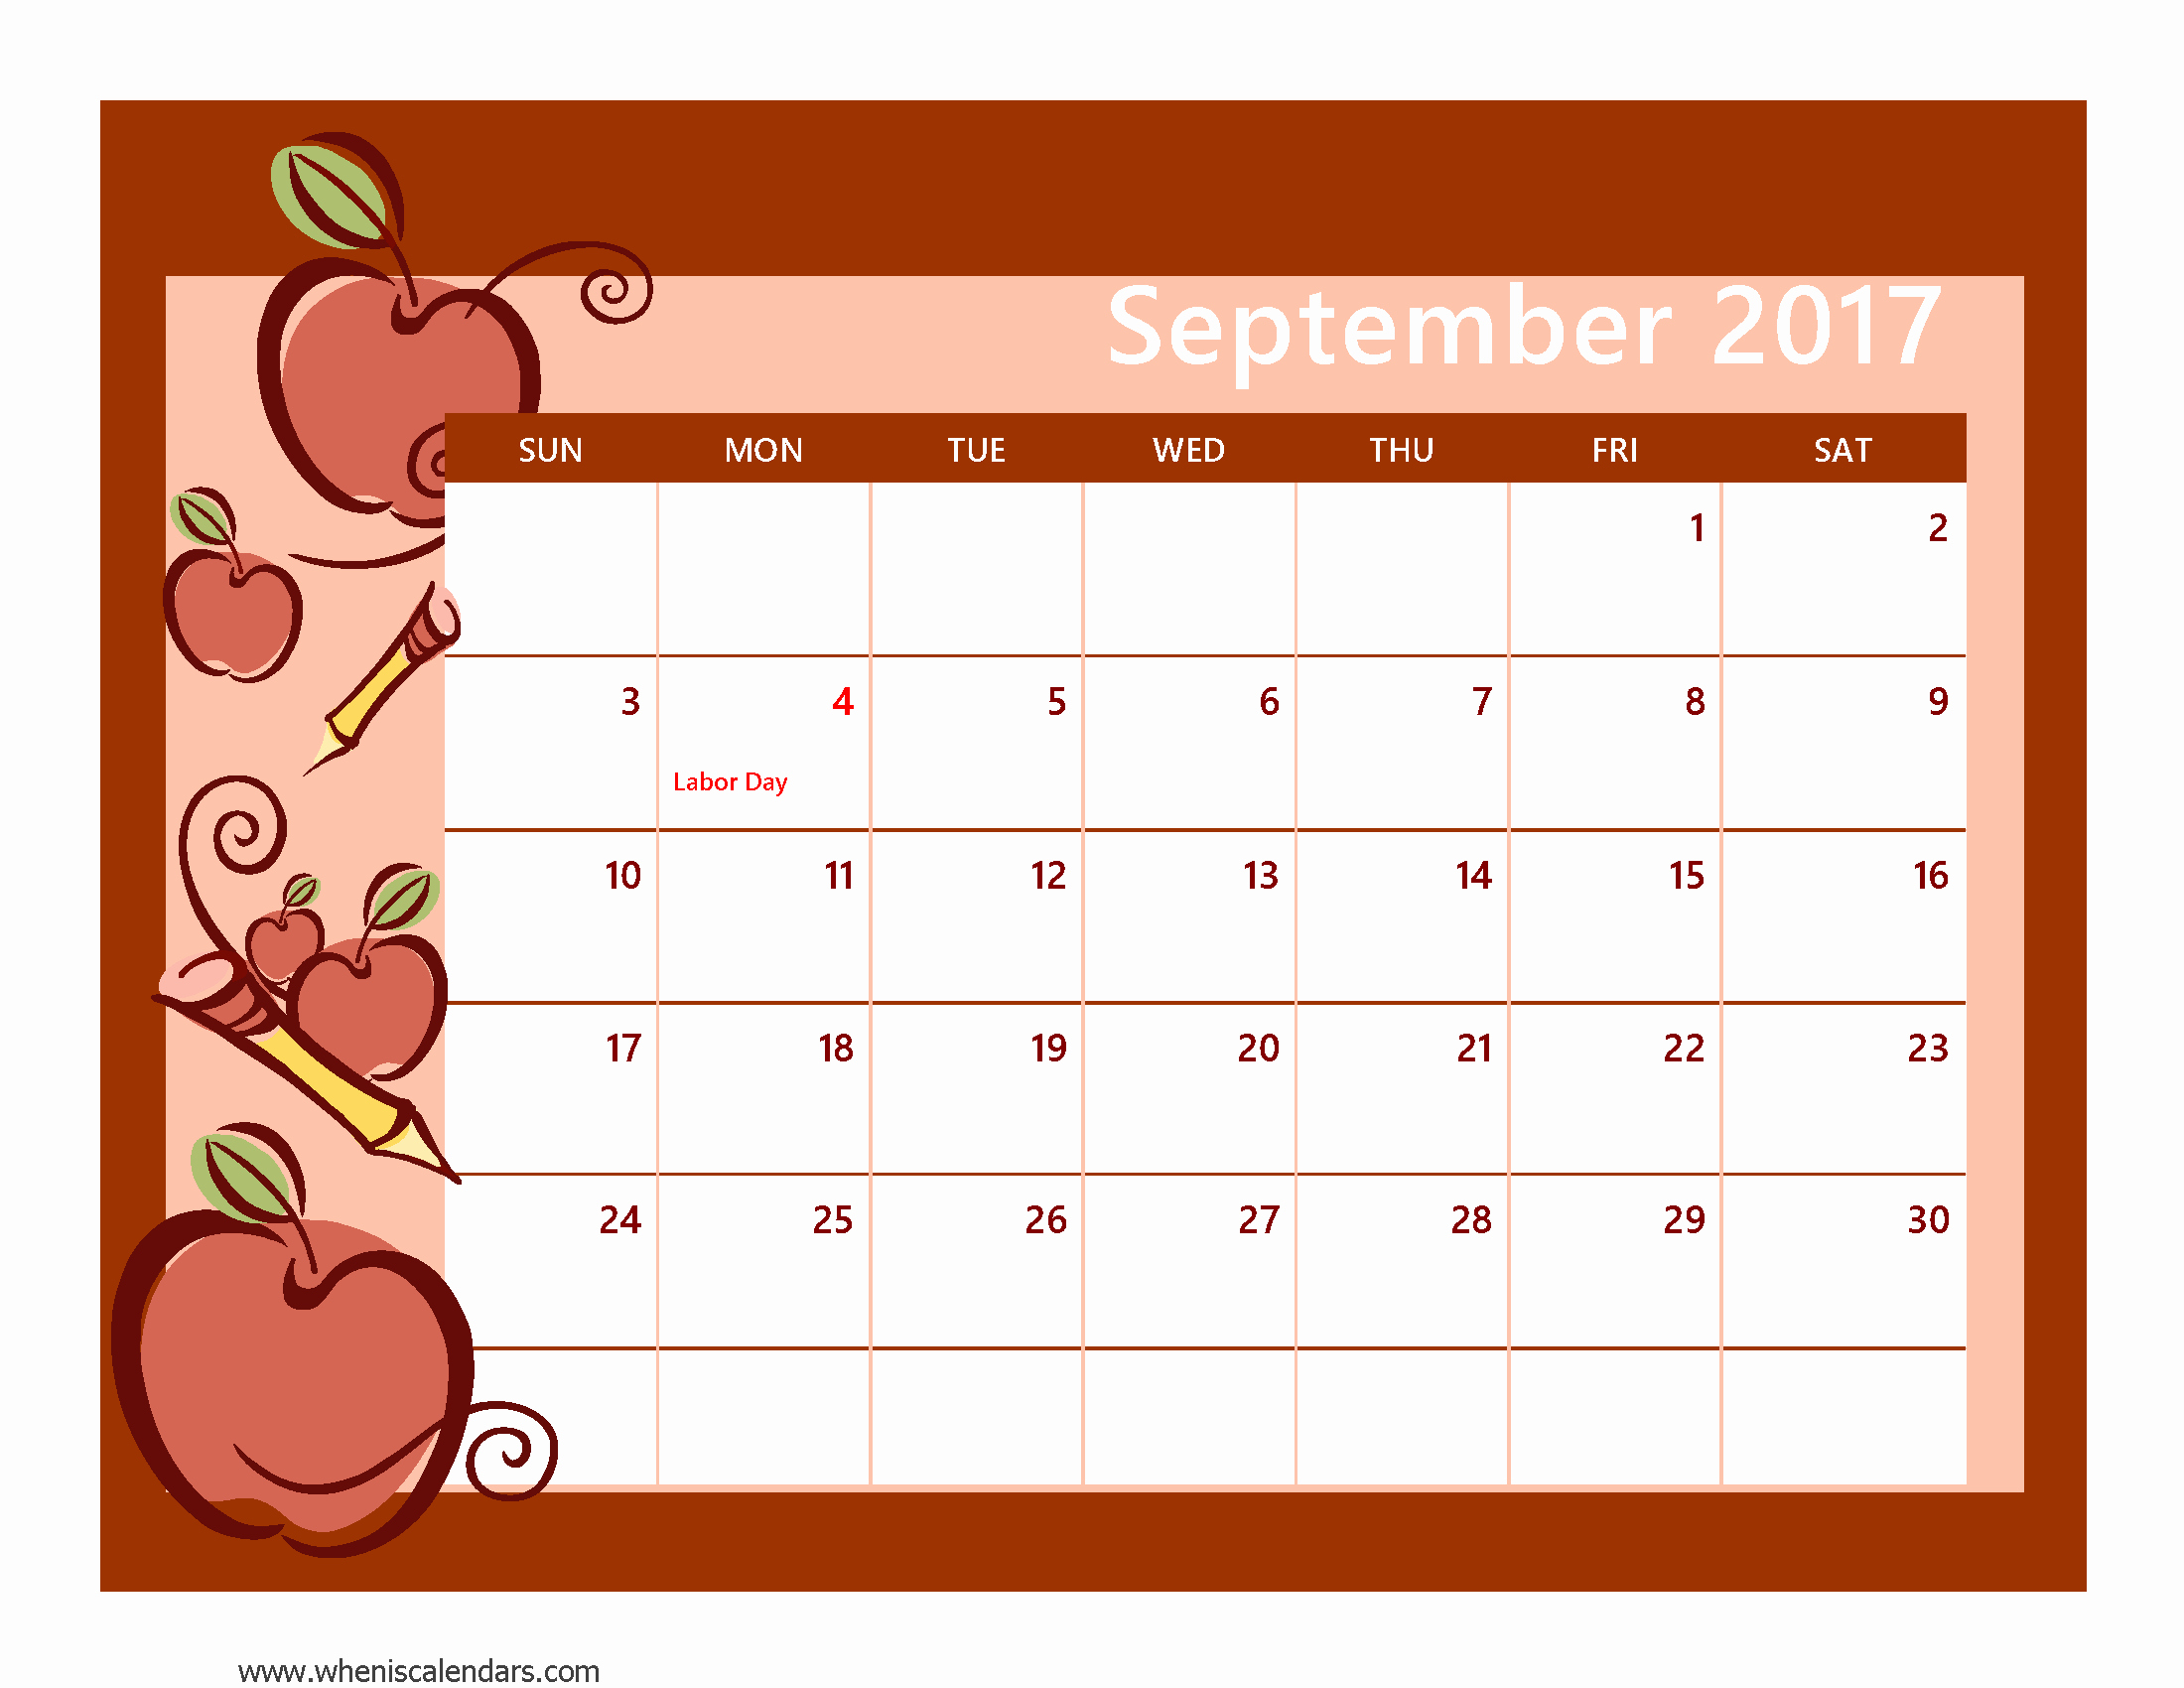 Calendar 2017 Template with Holidays Unique September 2017 Calendar with Holidays